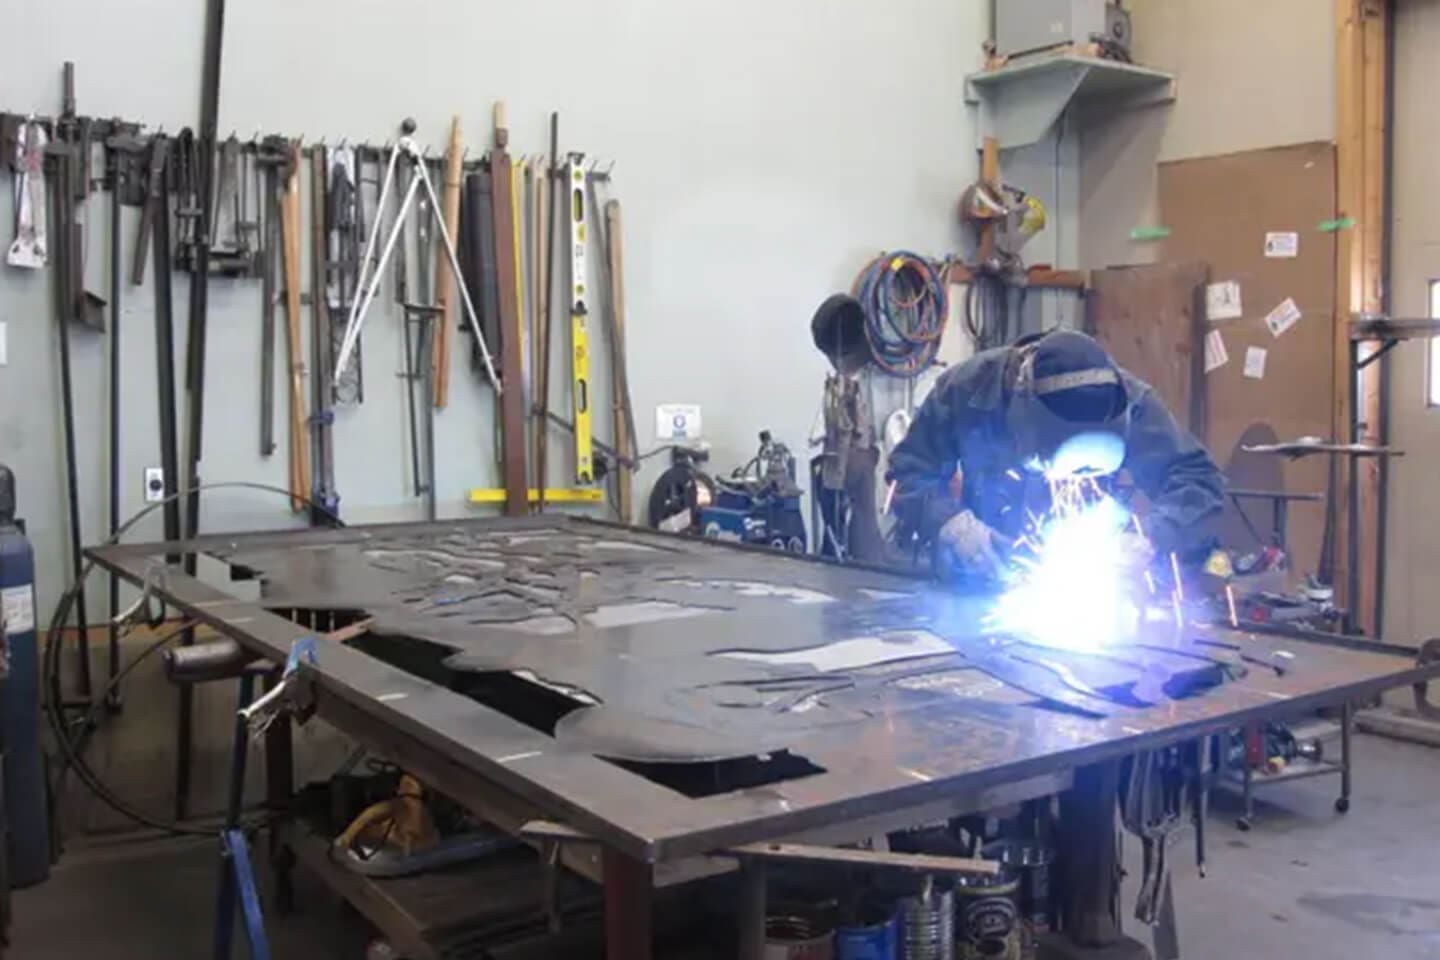 A man welding metal in an industrial setting.